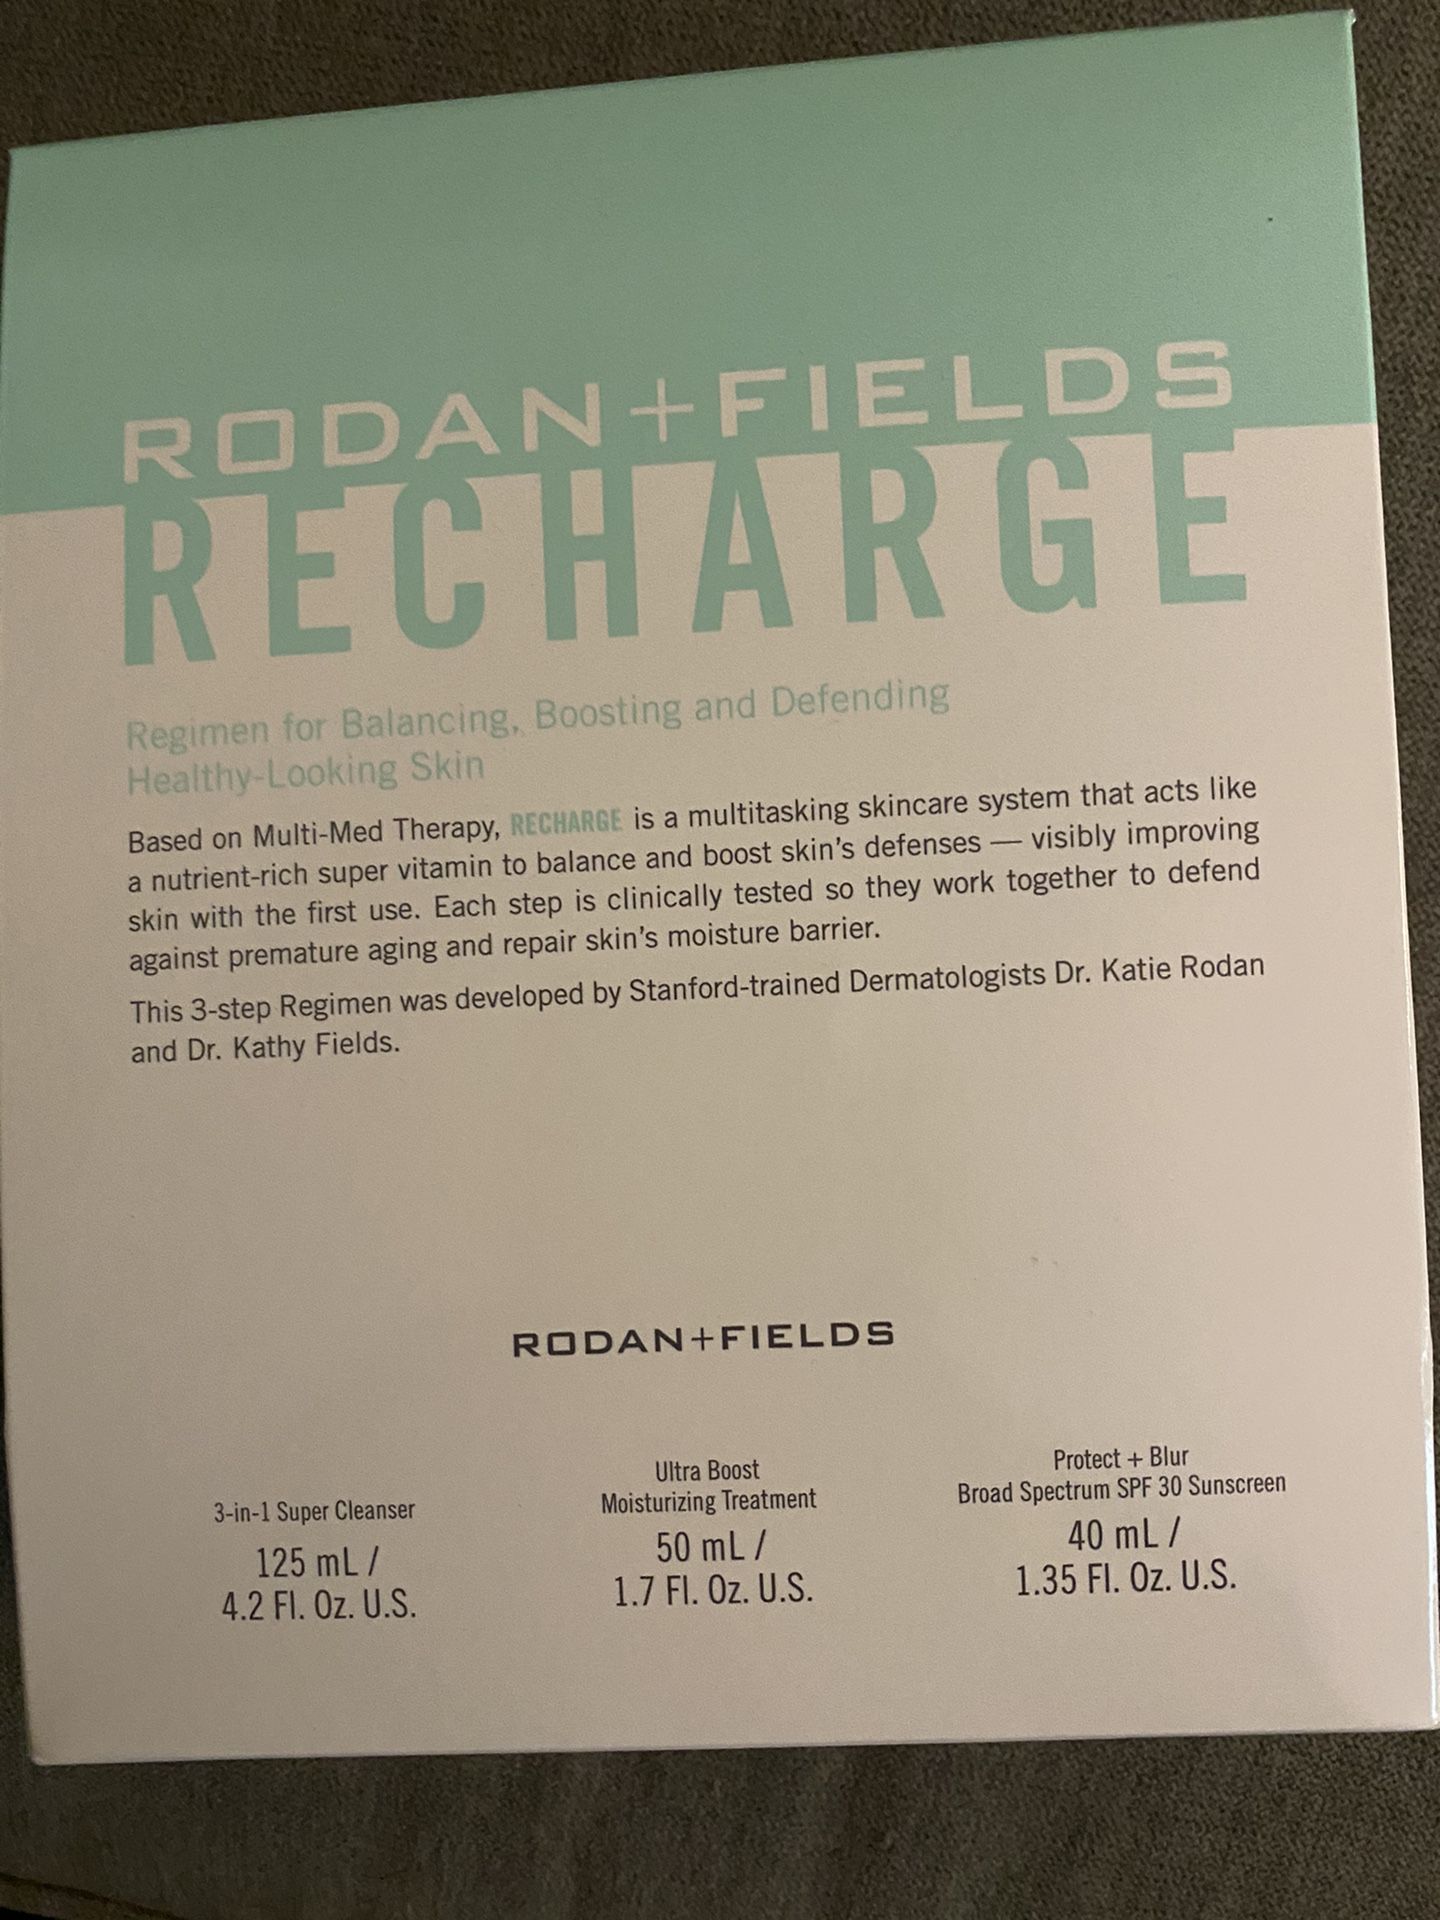 Rodan and field Recharge full regimen